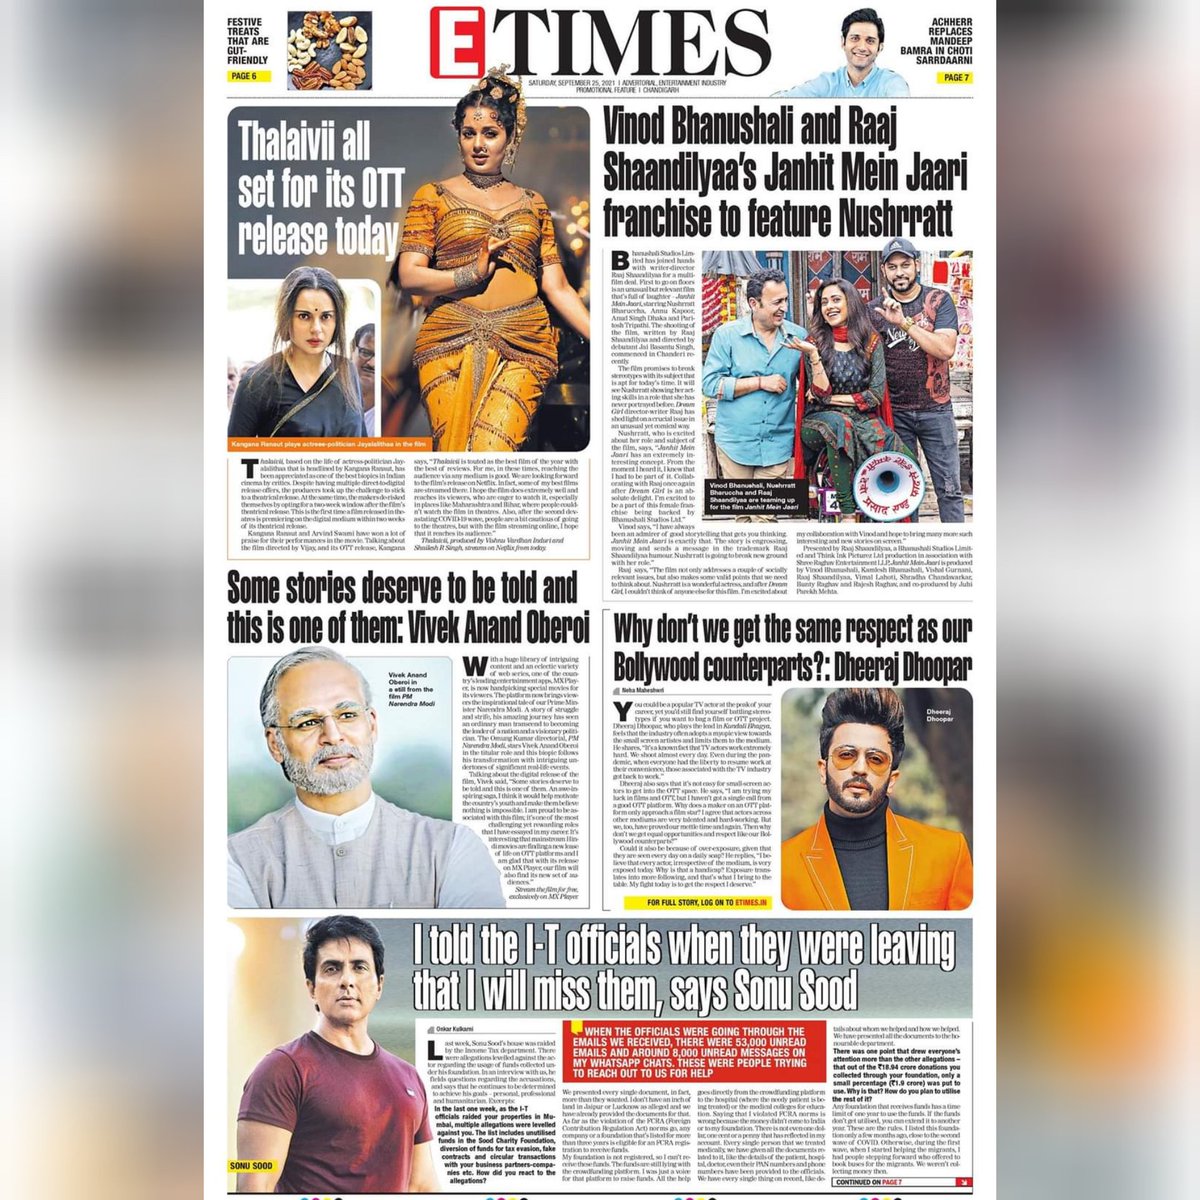 Are you missing ETimes' print edition? Log on to epaper.timesofindia.com to read.....
#thalaivii #kanganaranaut #nushrrattbharuccha #raajshaandilyaa #dheerajdhoopar #vivekanandoberoi #sonusood #ITofficials #bollywood
instagram.com/p/CUOl2Pap7vs/…